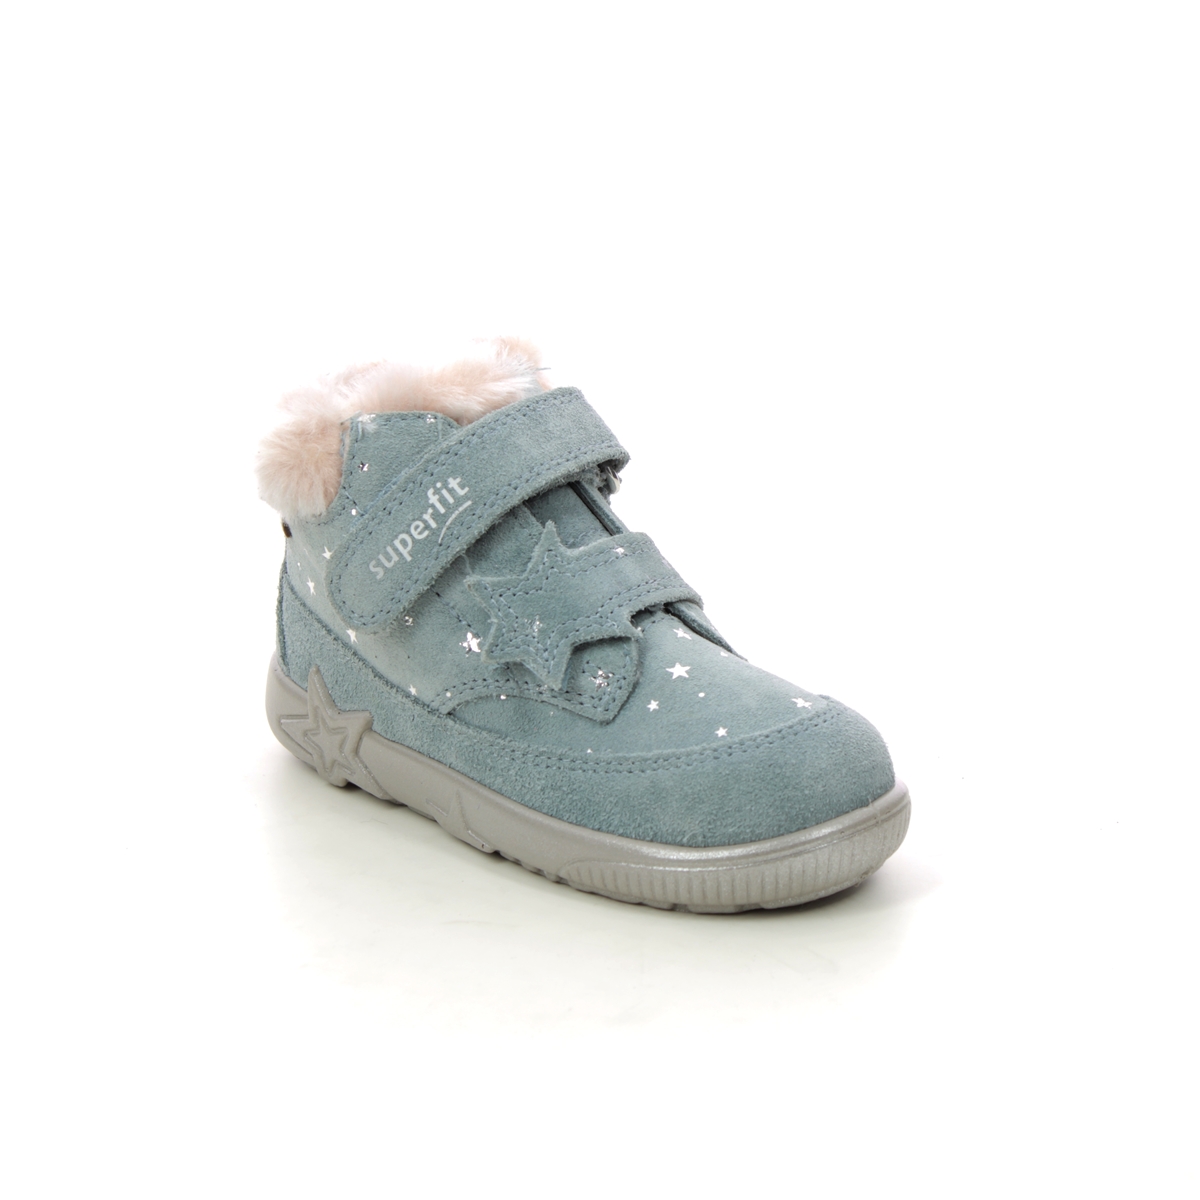 Superfit Starlight Gtx Light Blue Kids Toddler Girls Boots 1006445-7500 In Size 24 In Plain Light Blue For kids